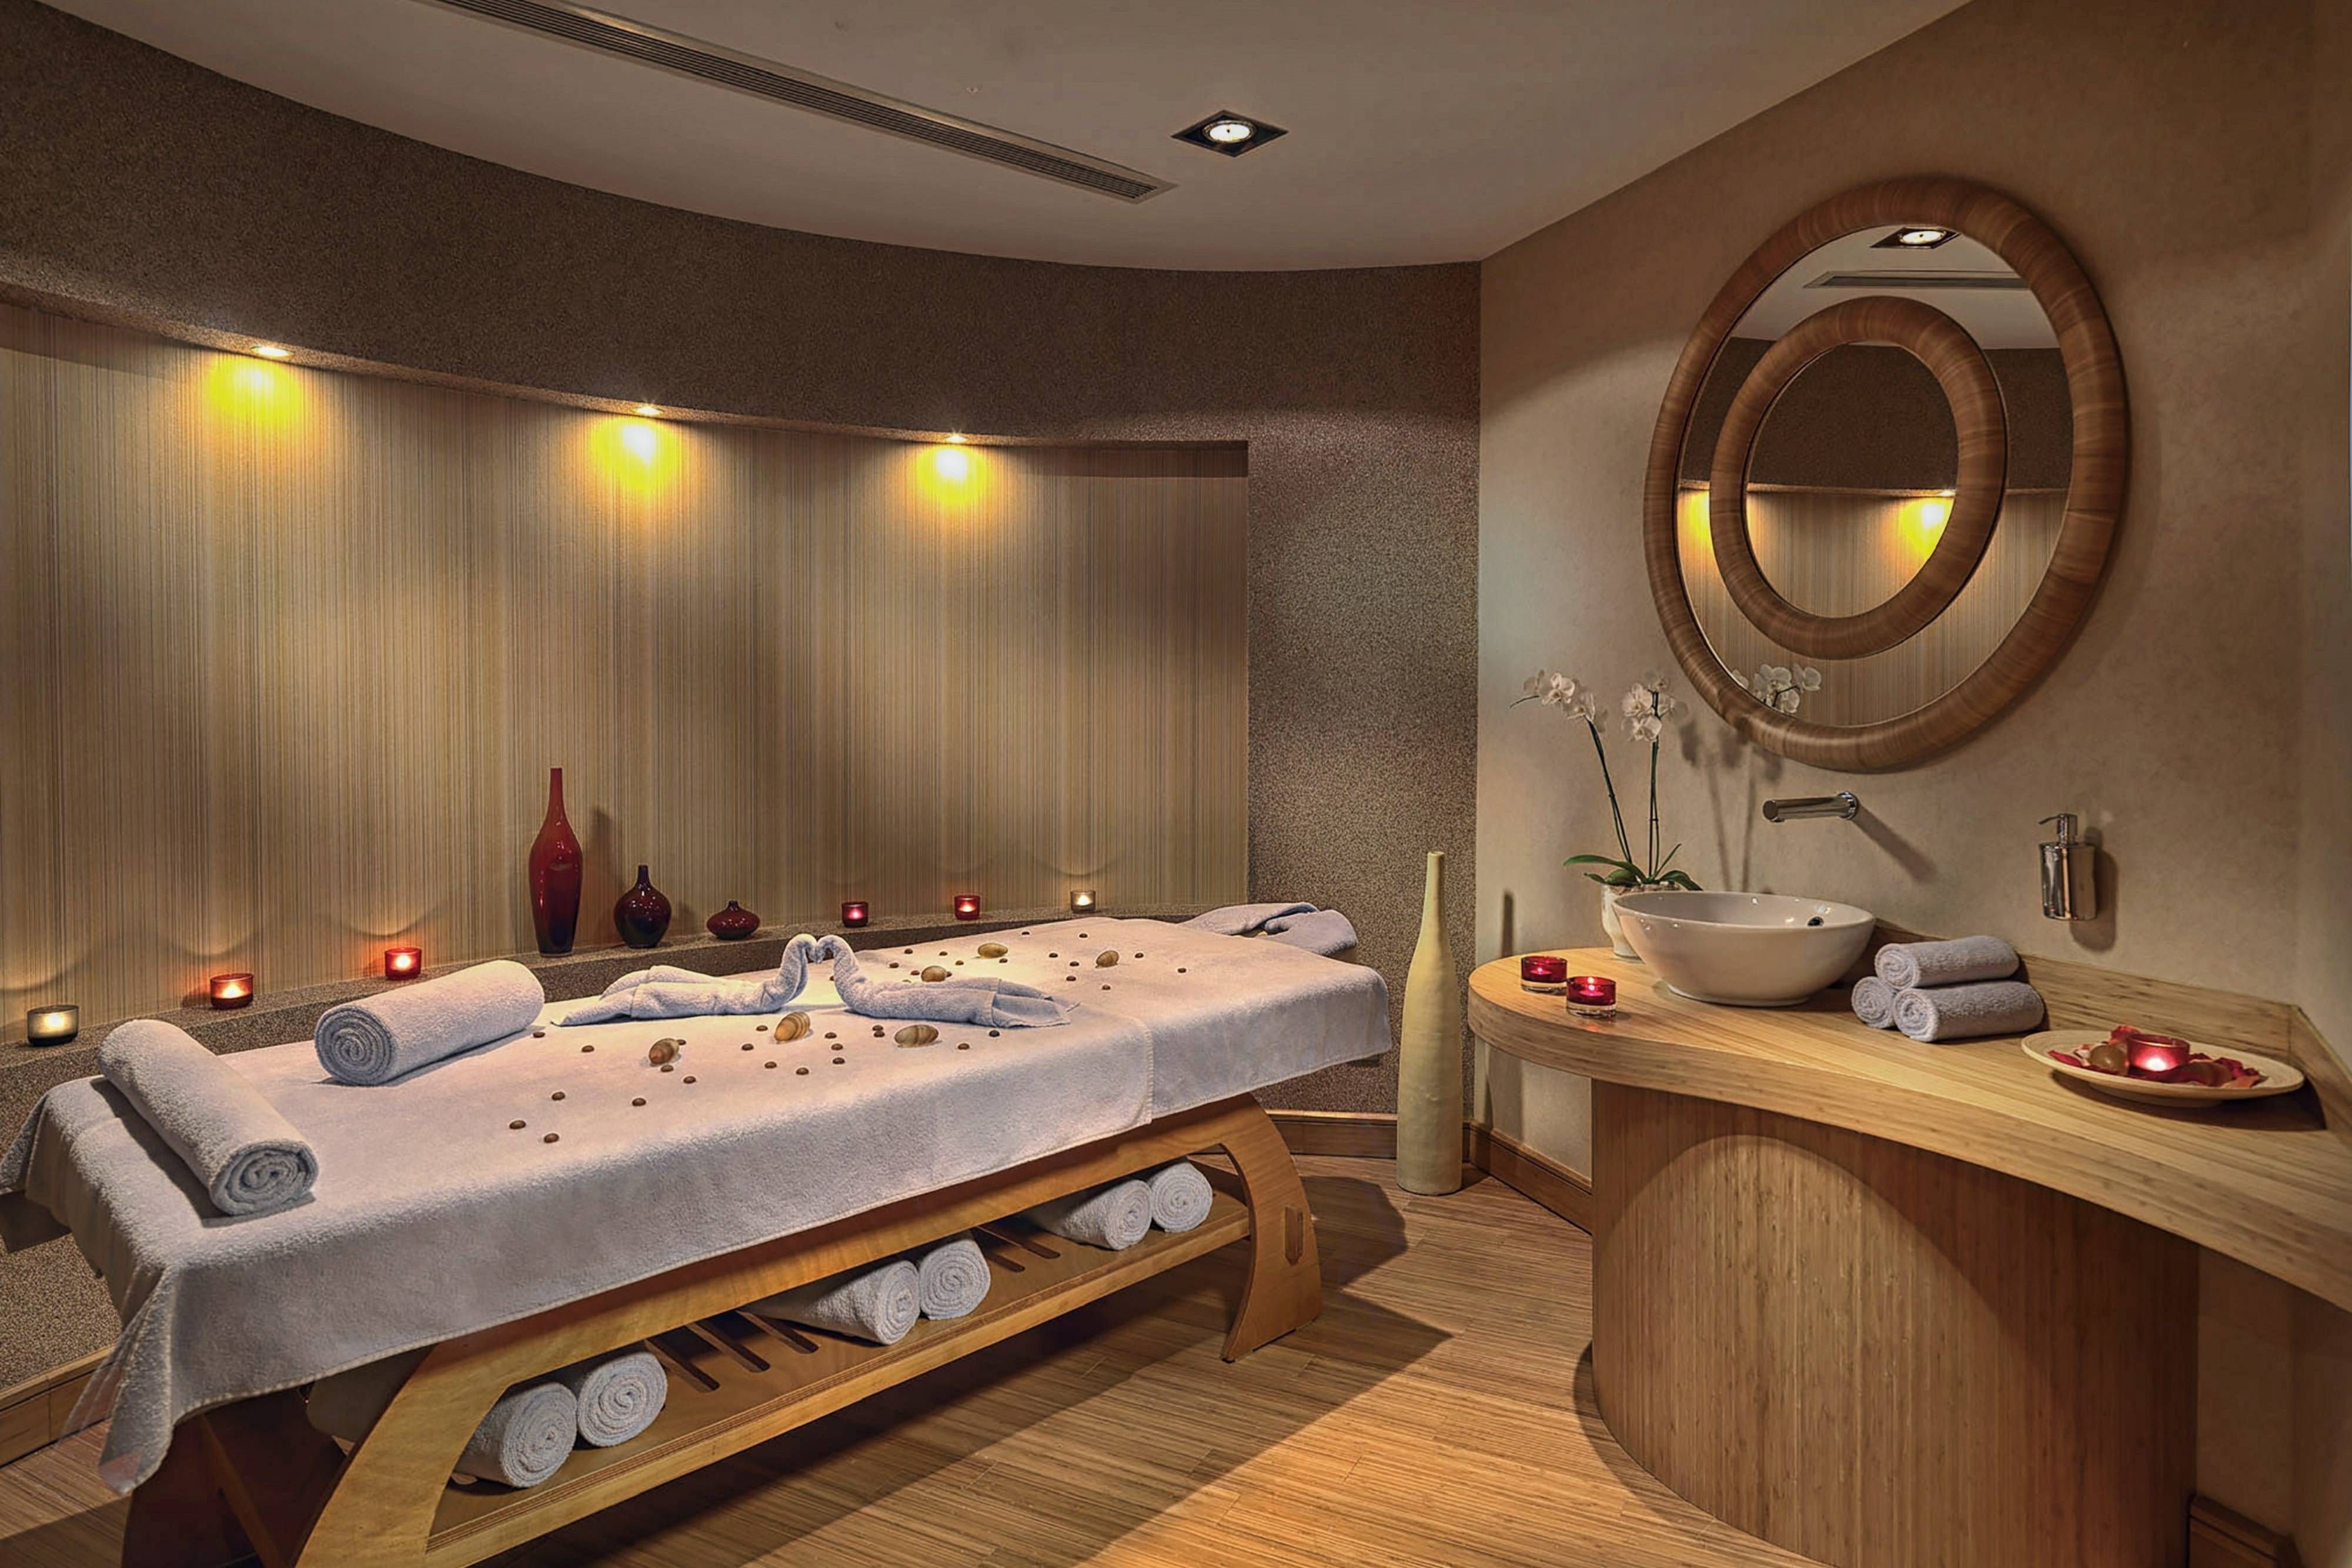 Массажный зал. Спа салон отель Марриотт. Истанбул Spa Salon. Комната для массажа. Интерьер массажного кабинета.